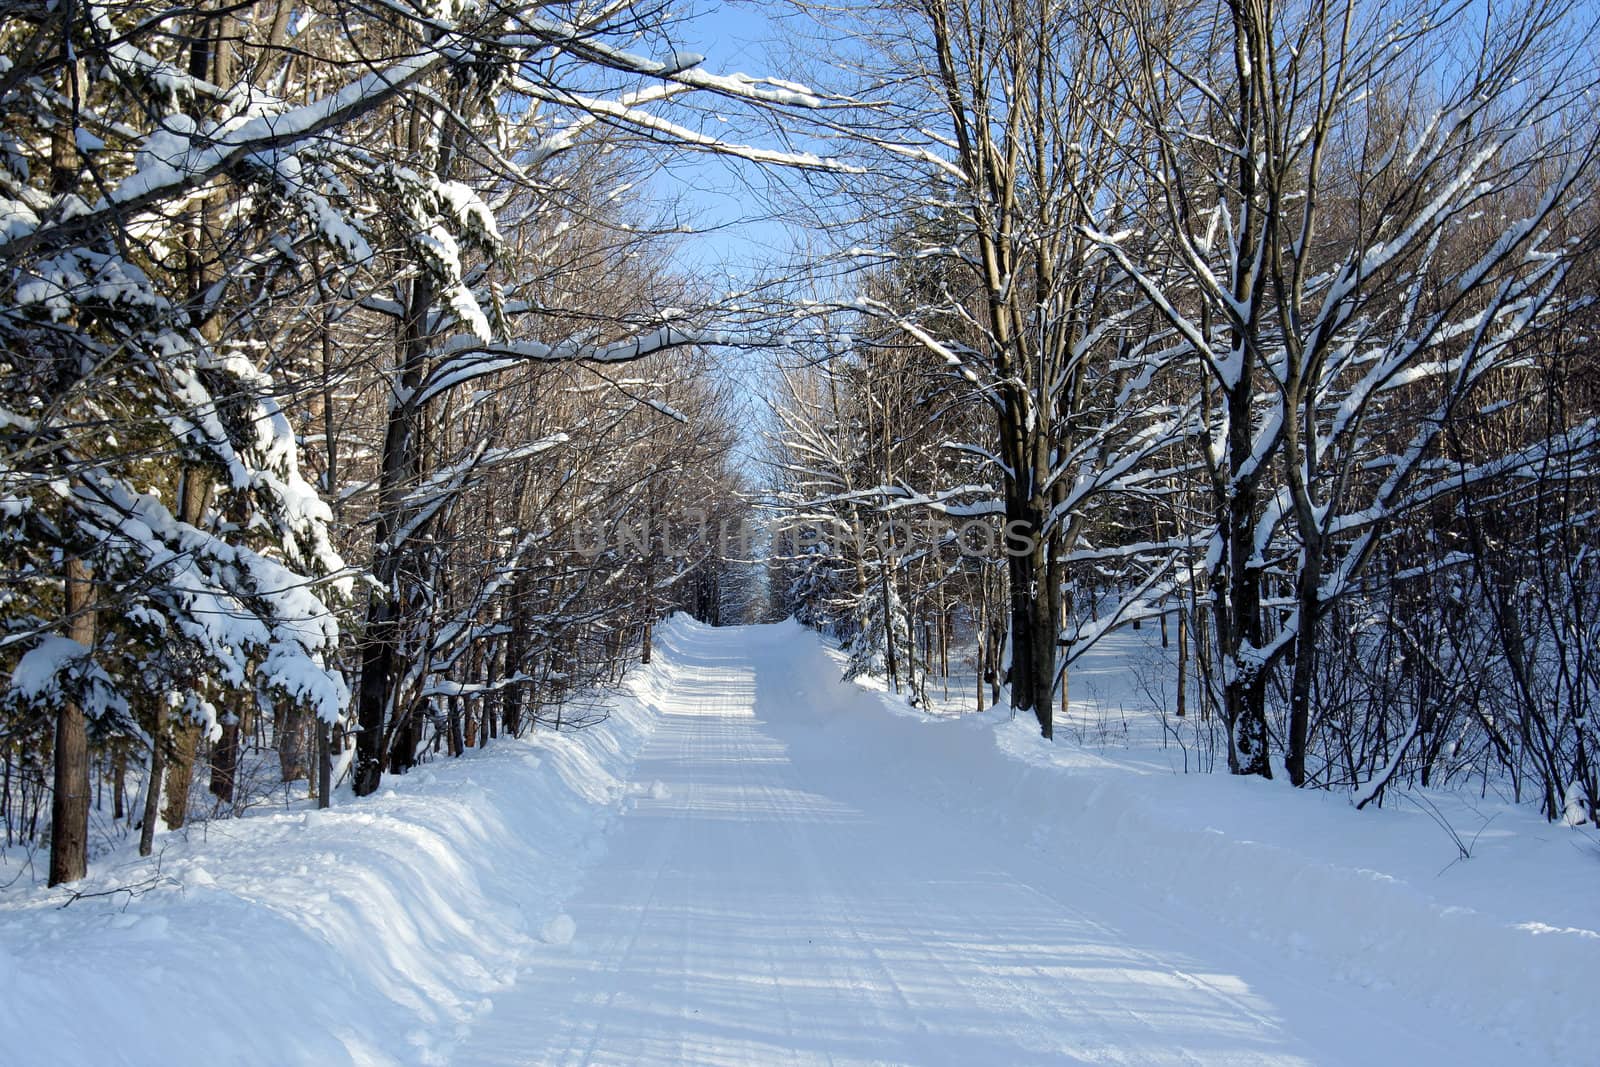 Winter road by Hbak